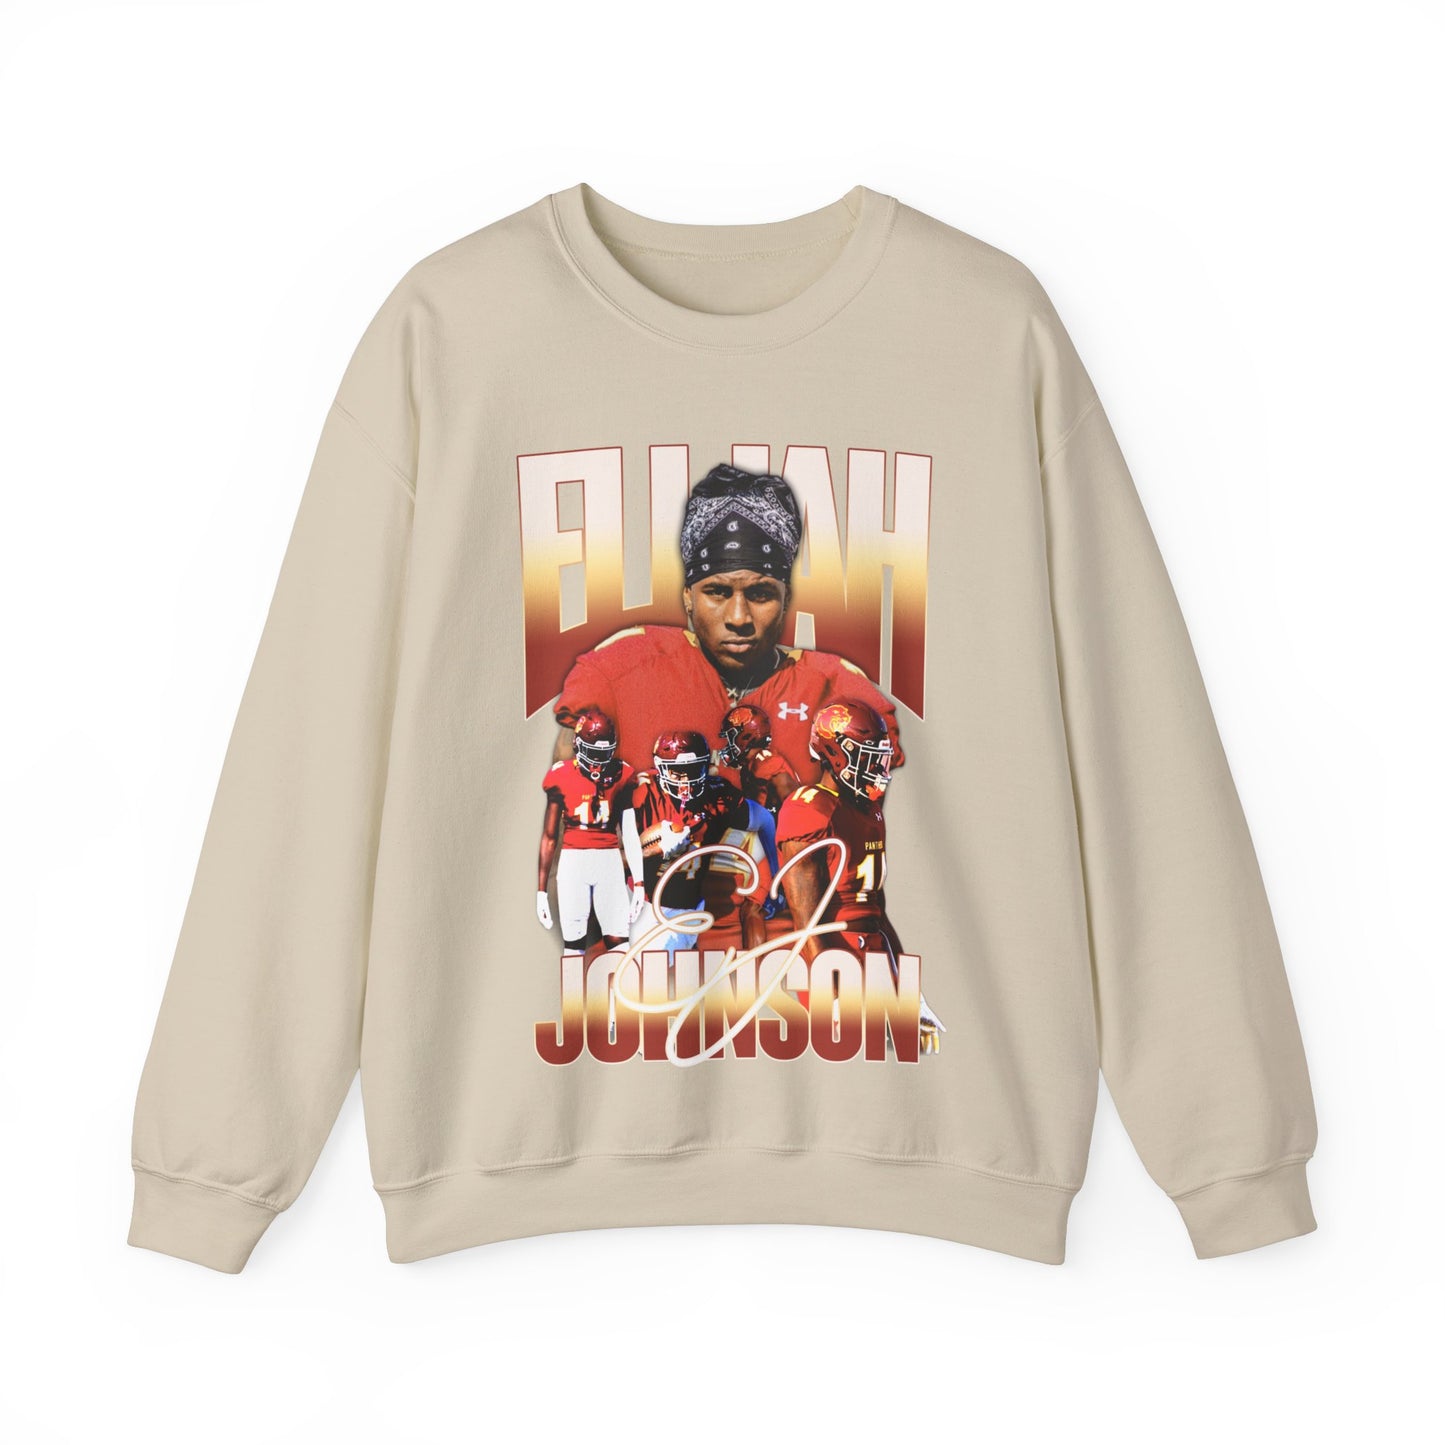 Elijah Johnson Crewneck Sweatshirt